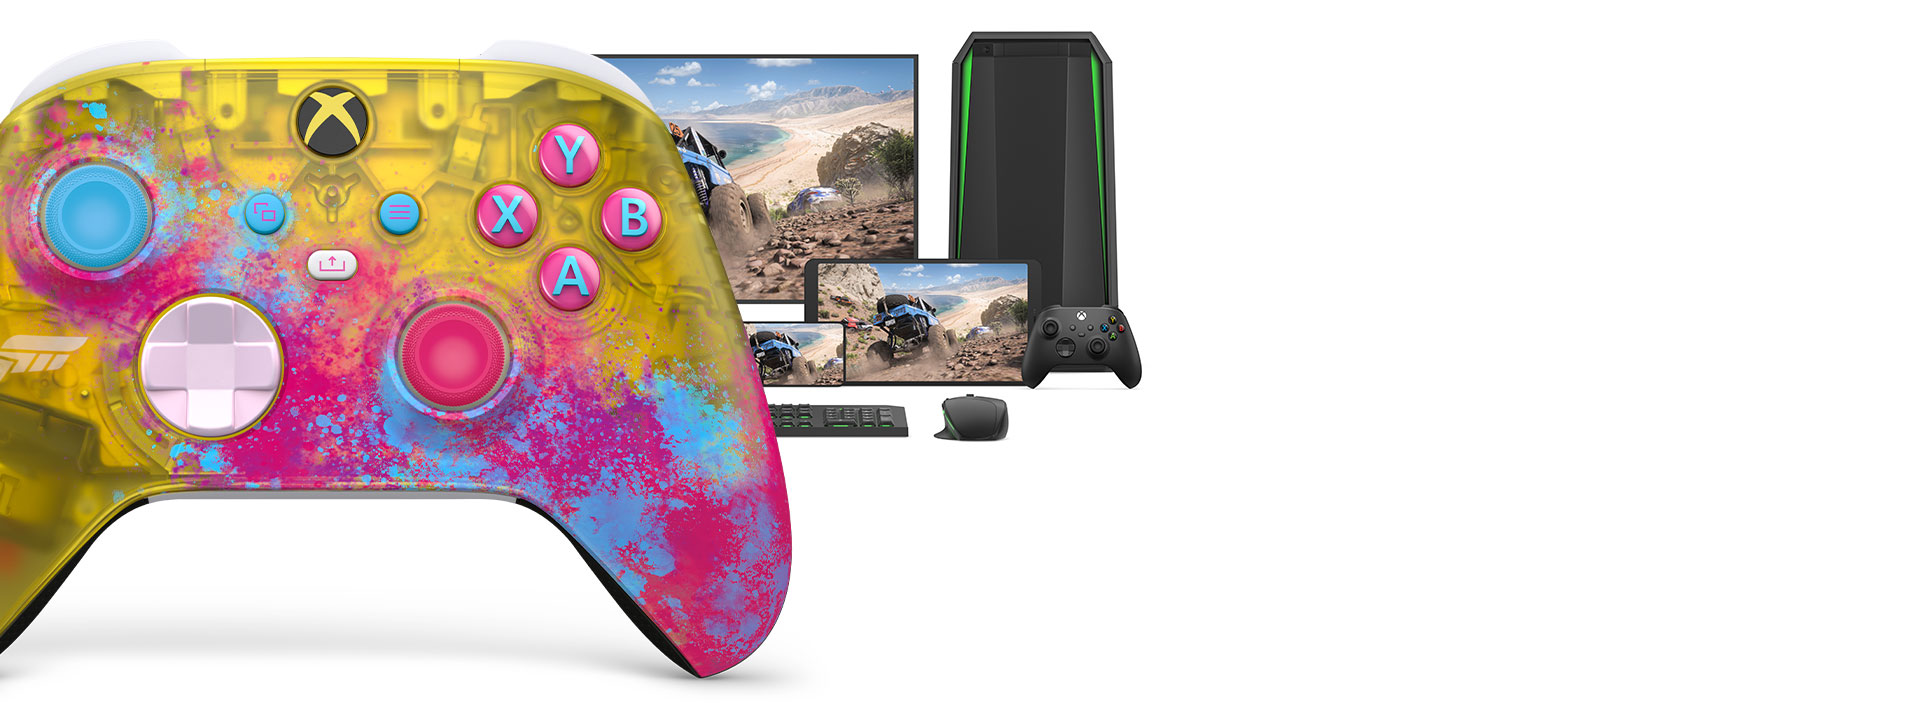 Беспроводной геймпад Xbox Forza Horizon 5 с компьютером, телевизором и консолью Xbox Series S